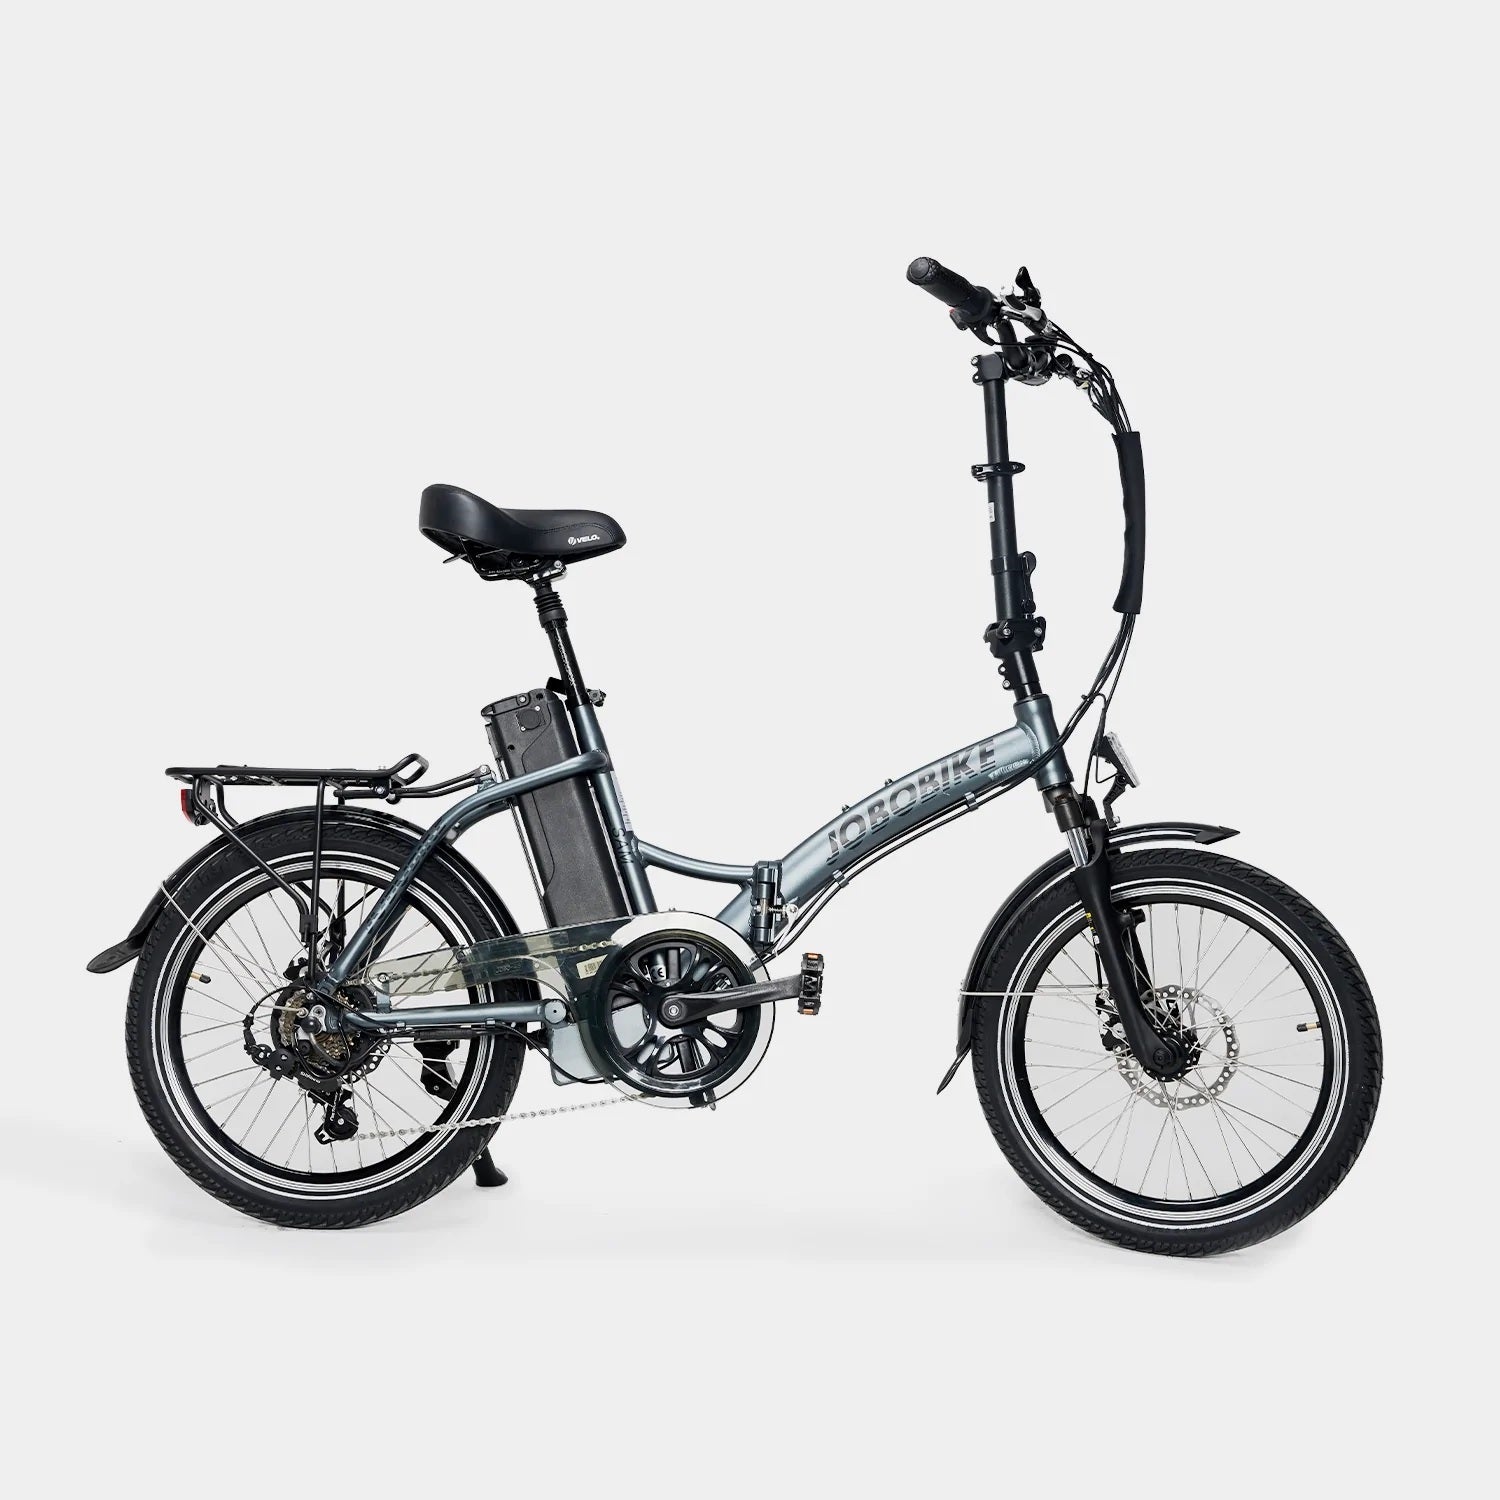 – Sam e-bike JOBOBIKE speed freewheel Shimano 7 20 inch 11-28T